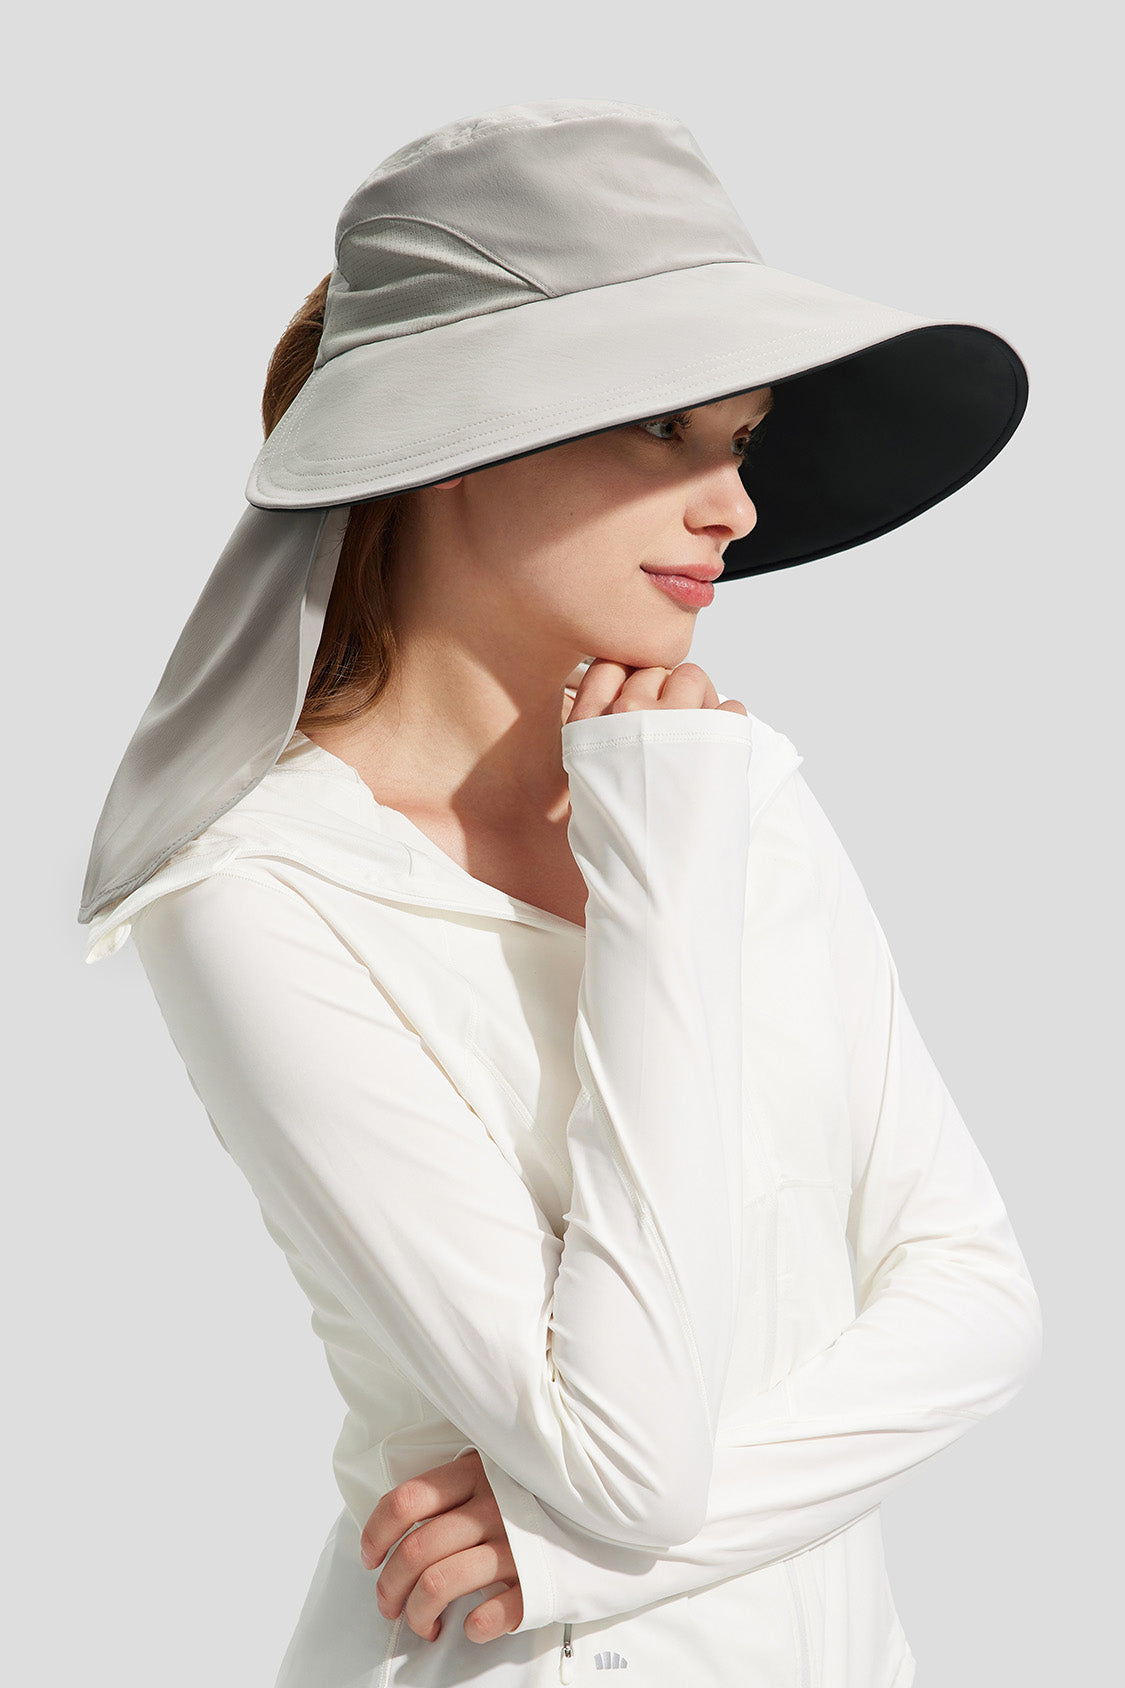 beneunder women's sun hats full coverge #color_deep rock gray